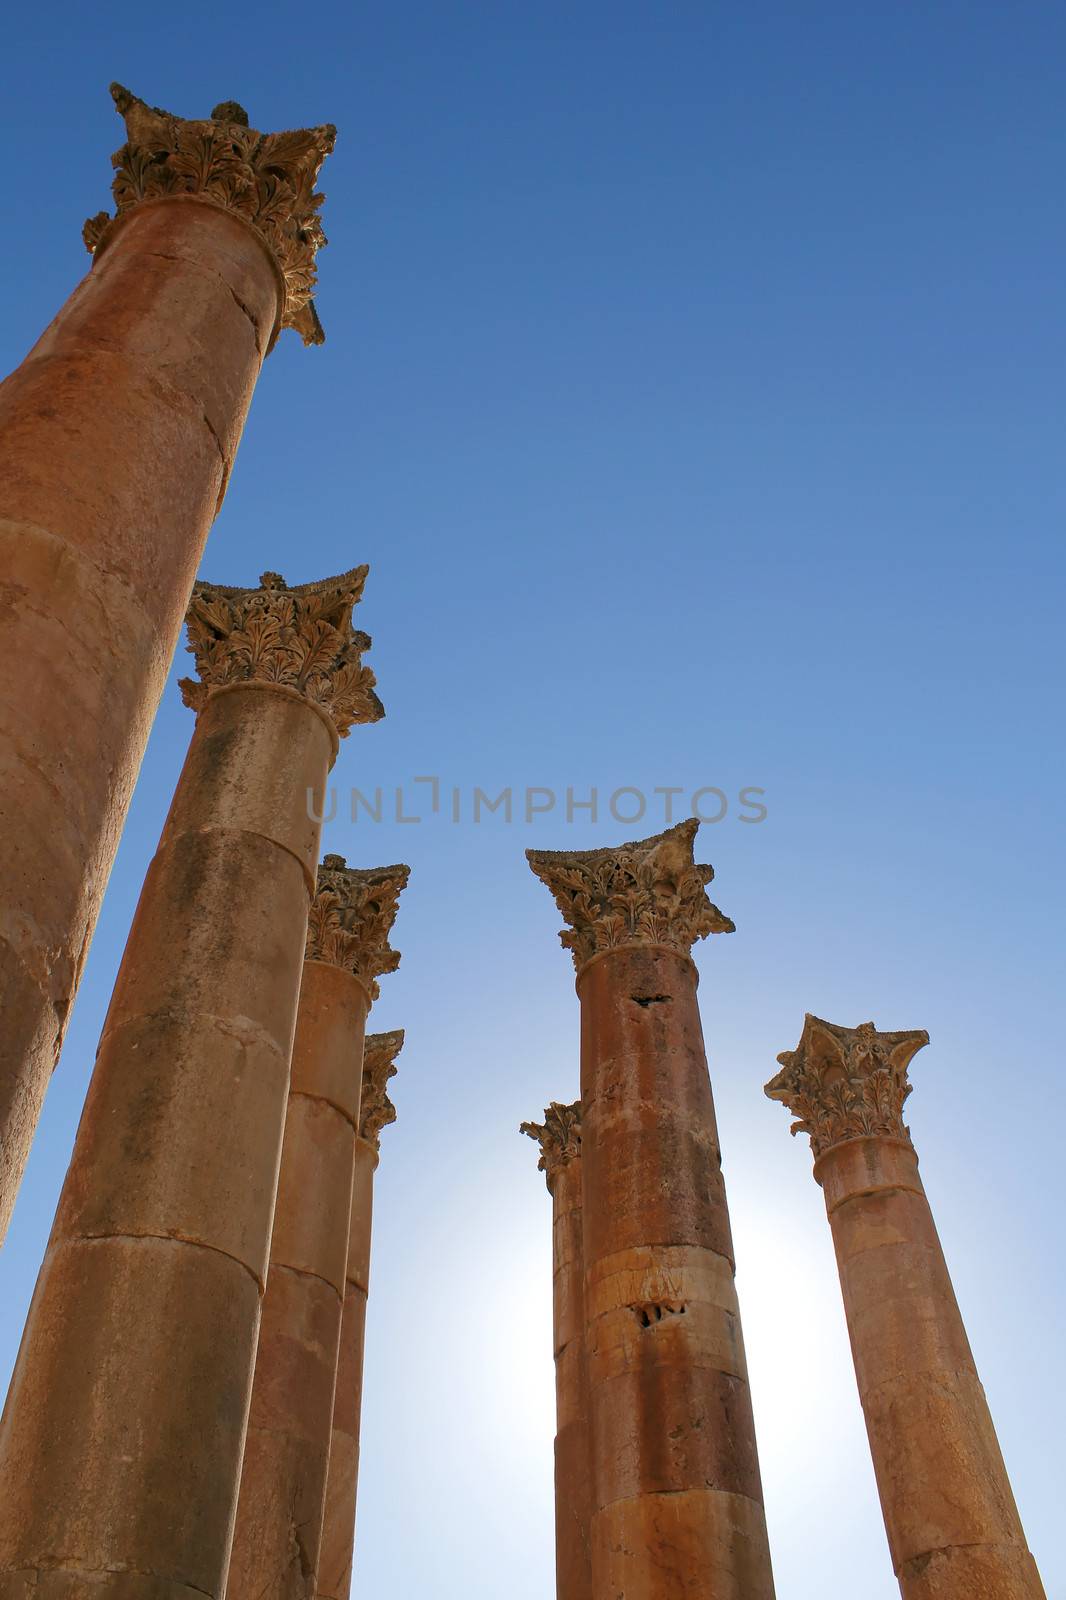 Temple of Artemis corinthian coluums. Ruins of the Greco-Roman city of Gerasa. Ancient Jerash, in Jordan.